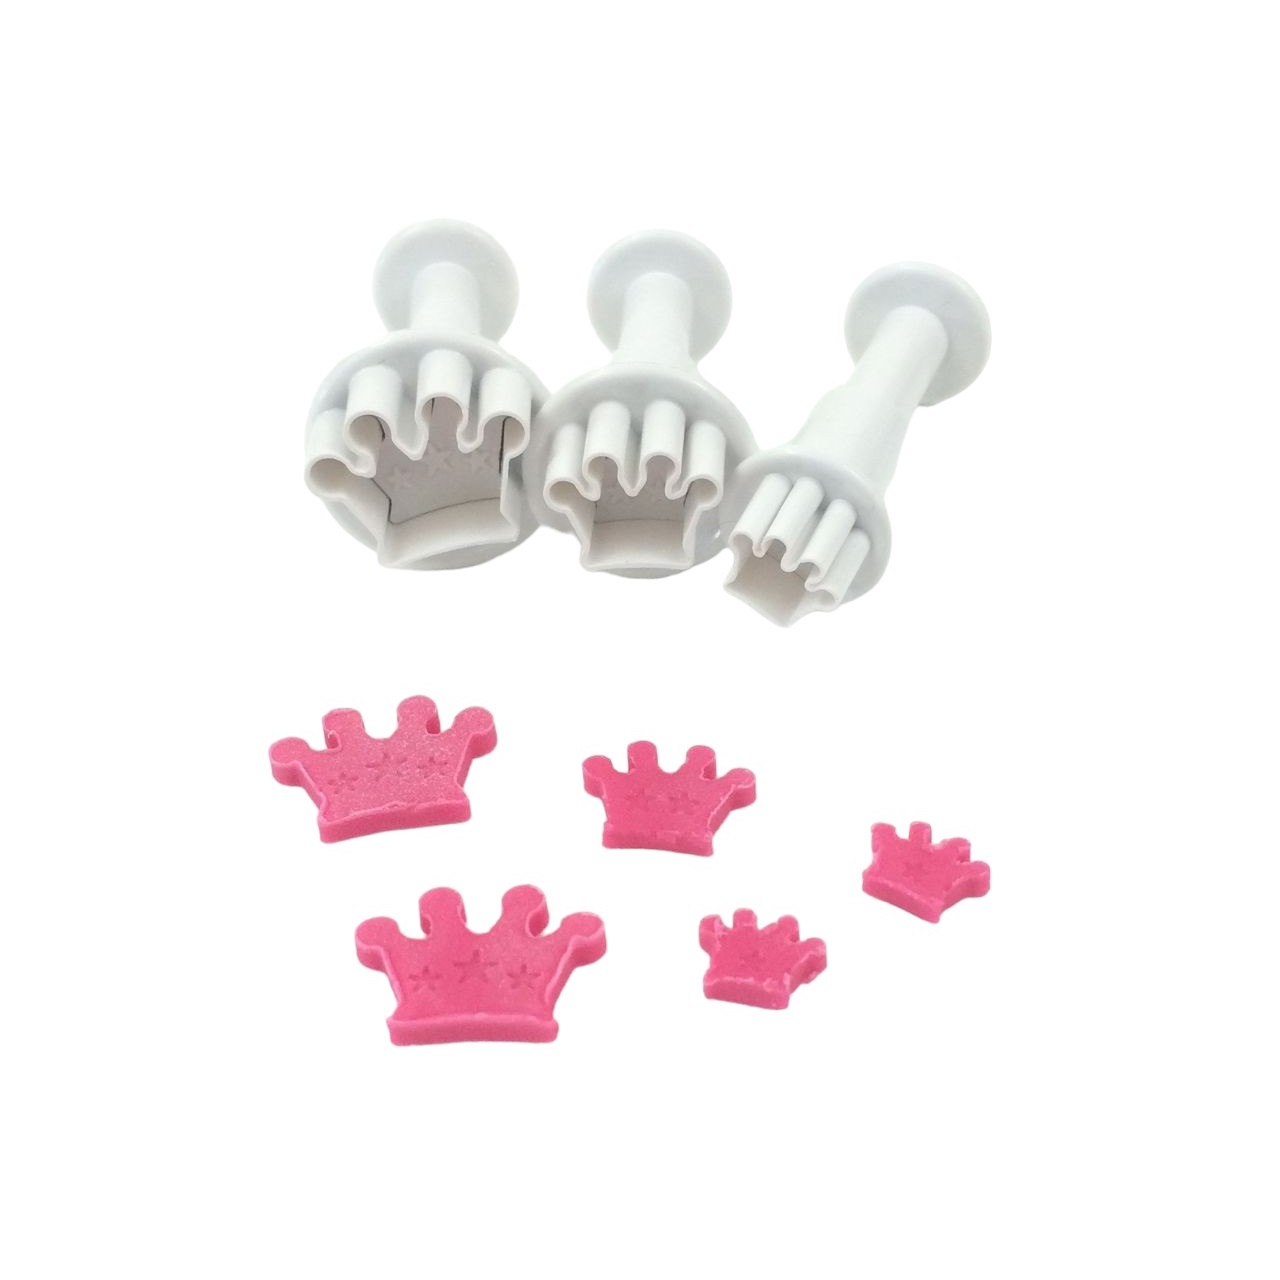 Cutter mini crown - (set of 3 pieces) FINAL SALE